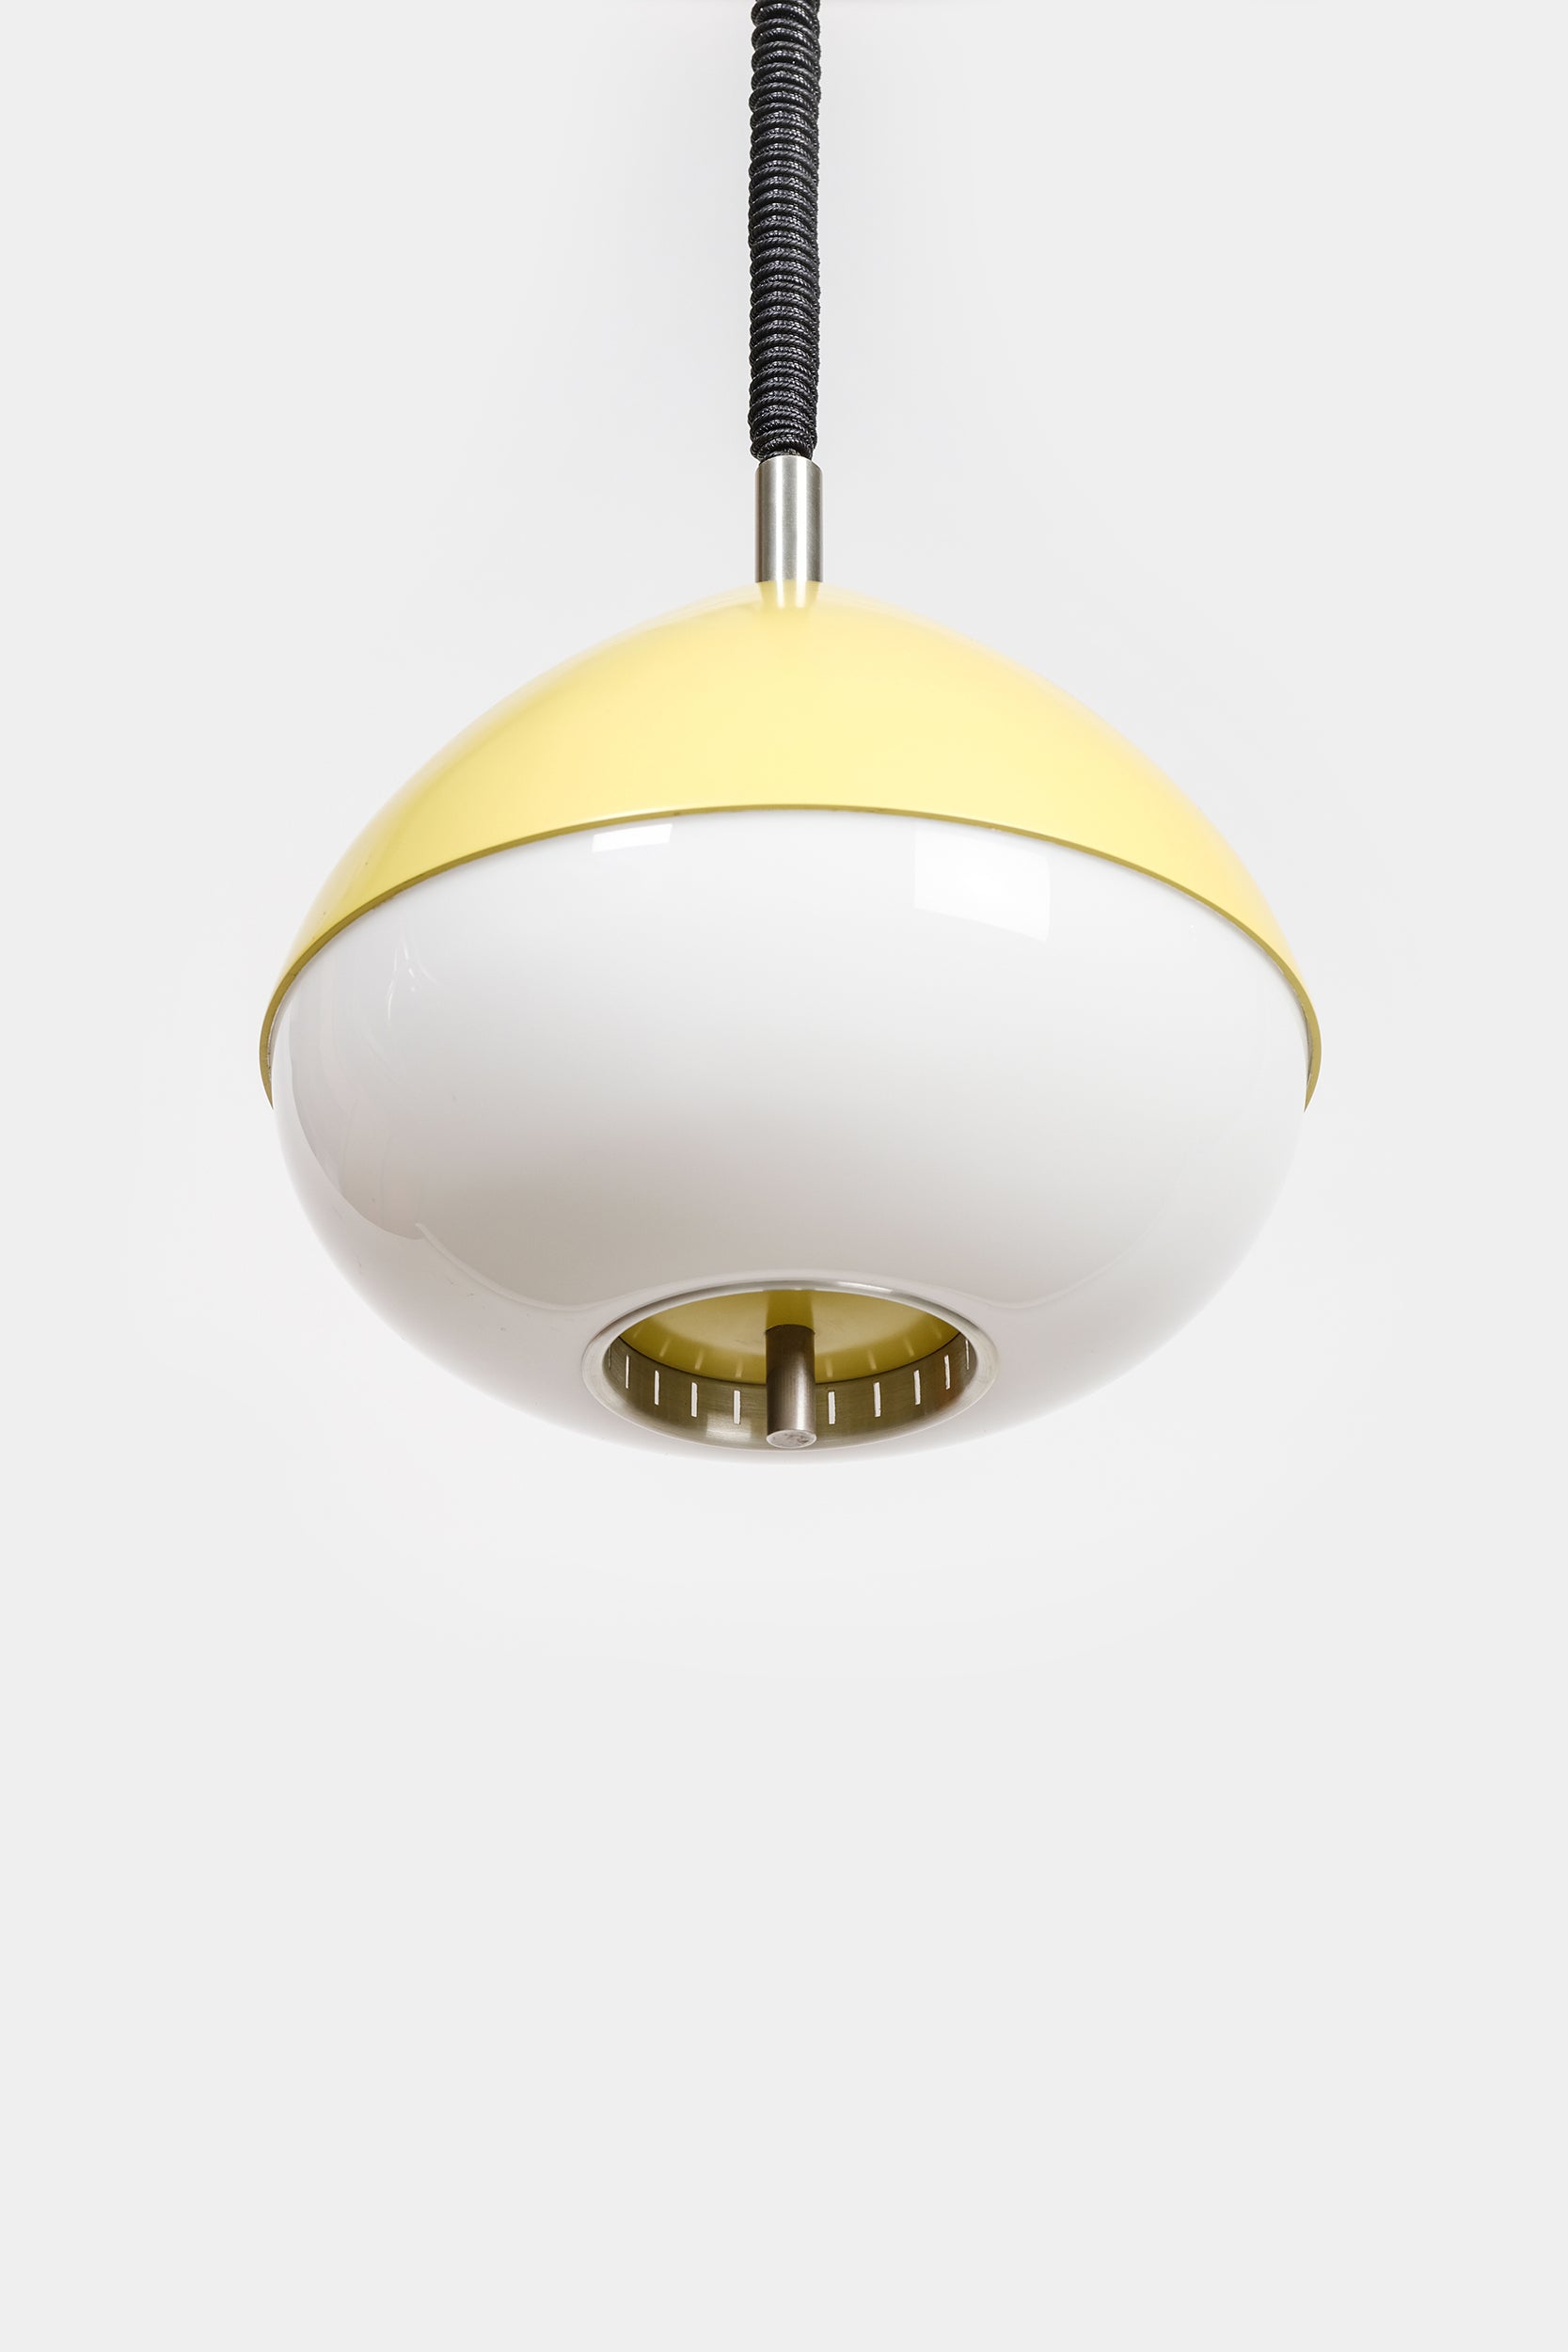 Stilnovo Attr. Height-adjustable ceiling lamp, Italy, 50s